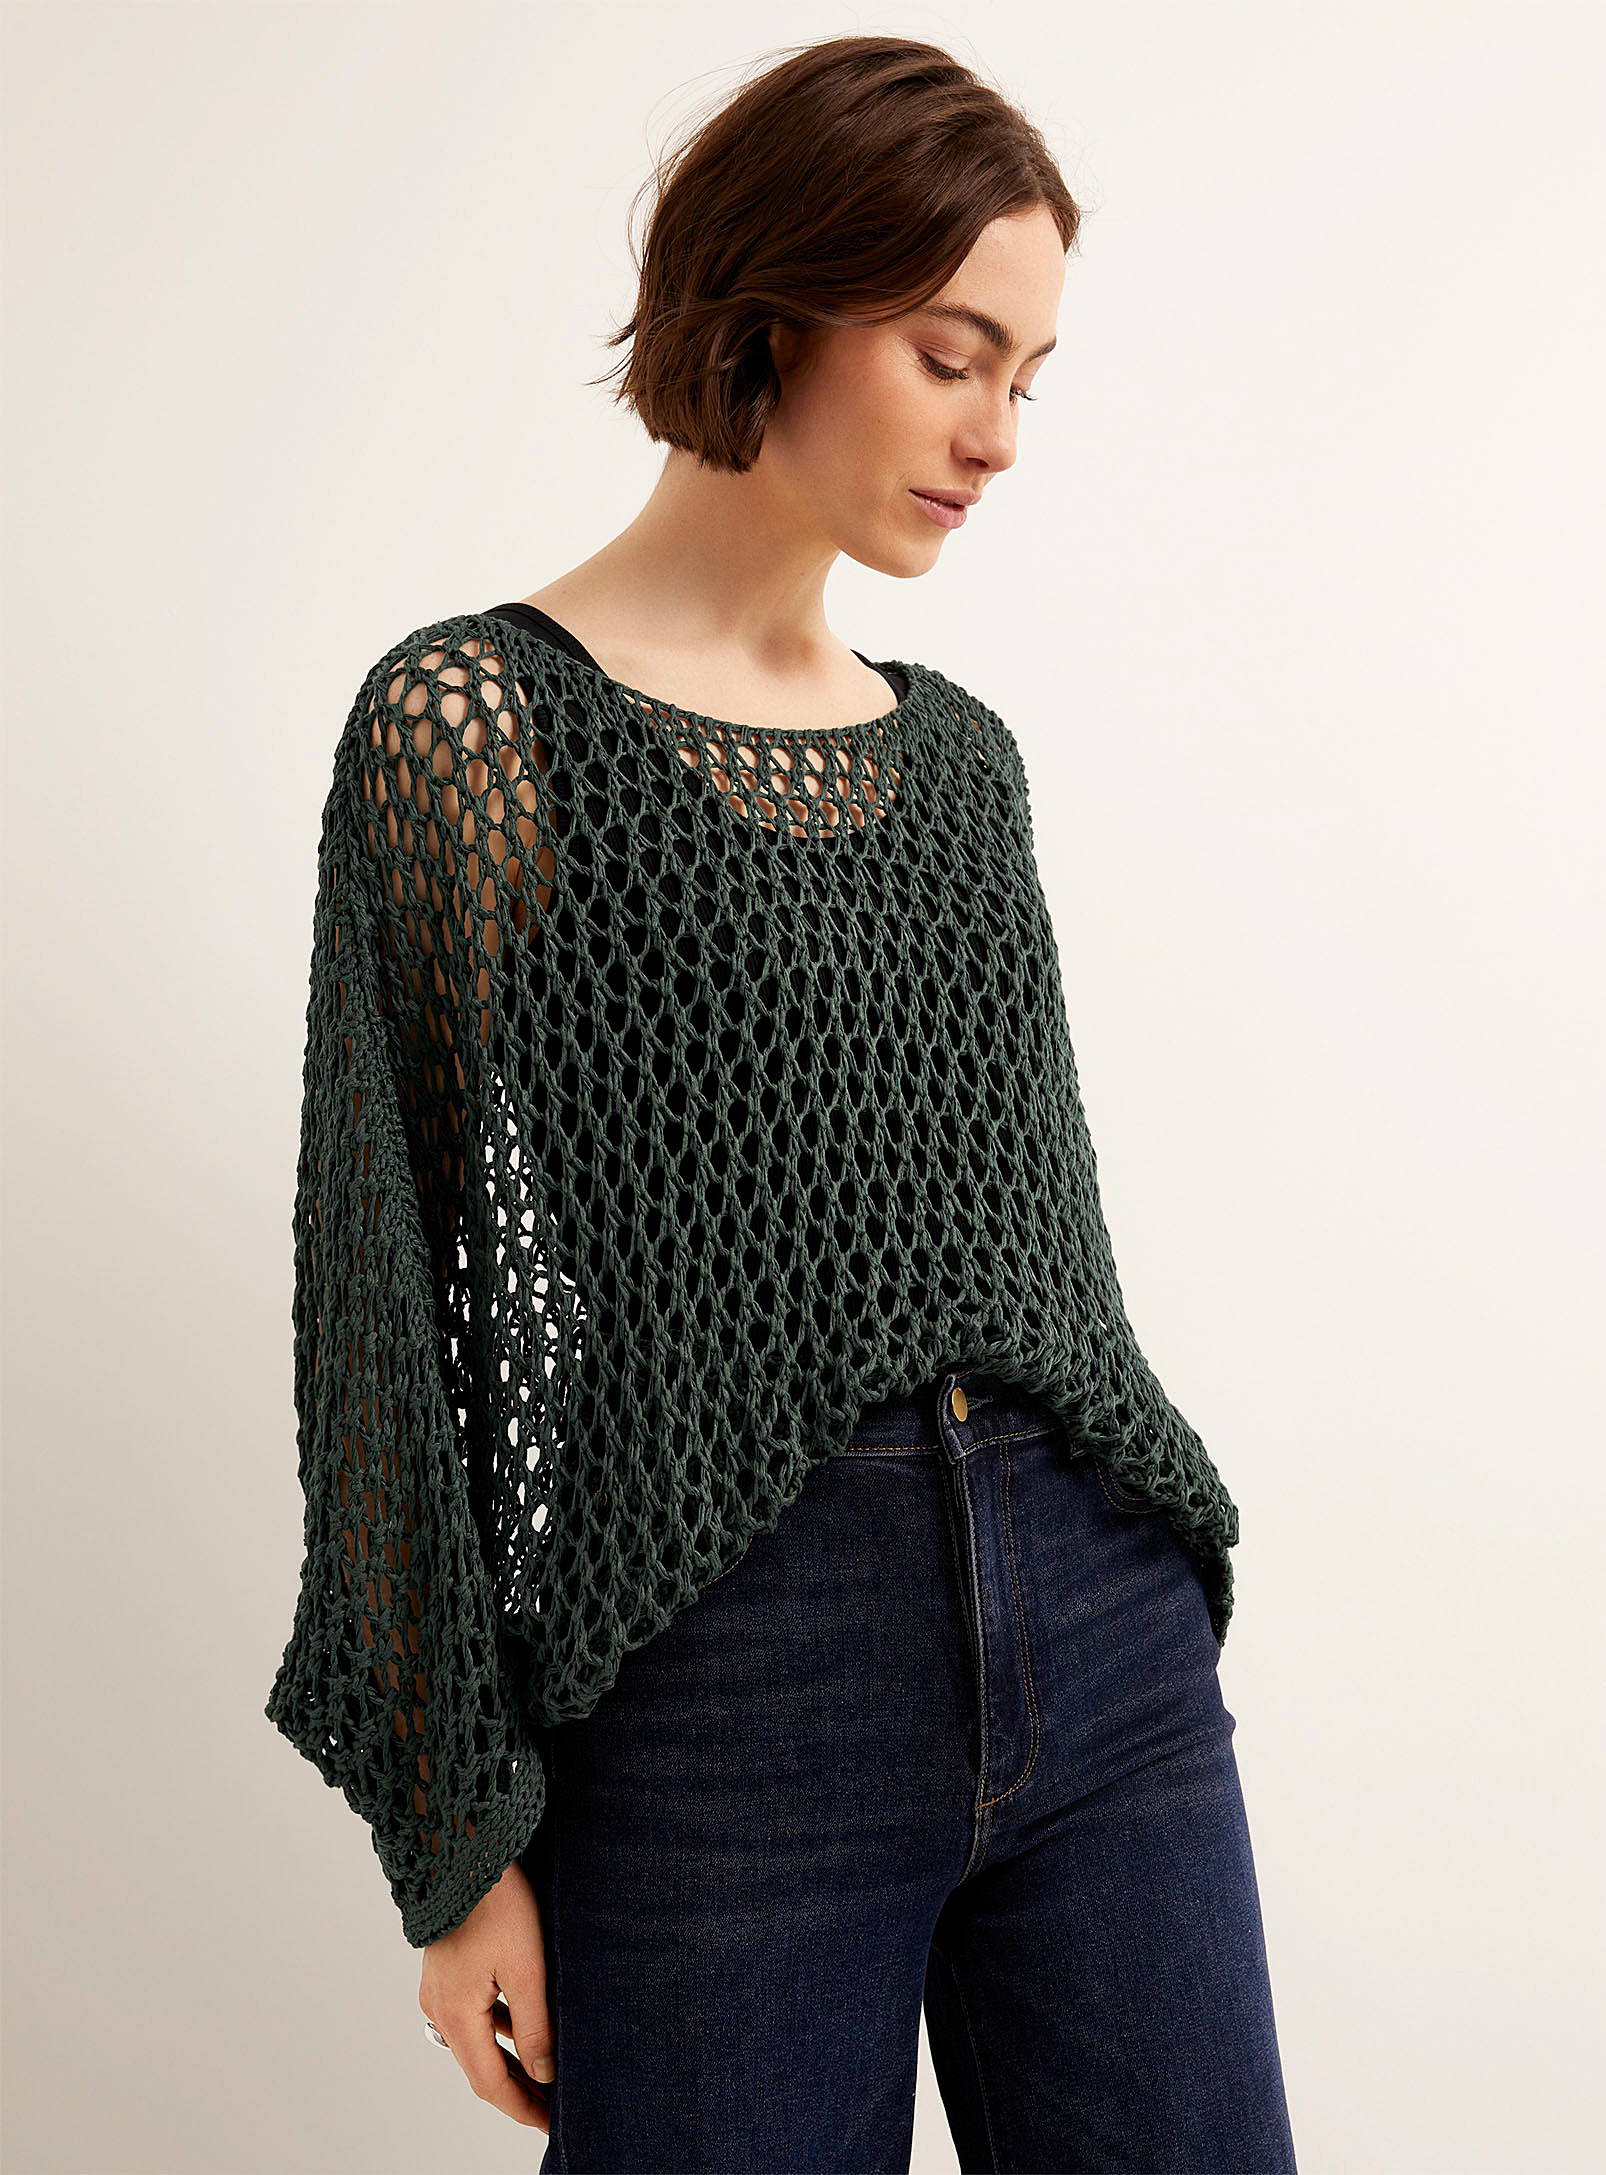 Contemporaine Openwork Crocheted Poncho Sweater In Green